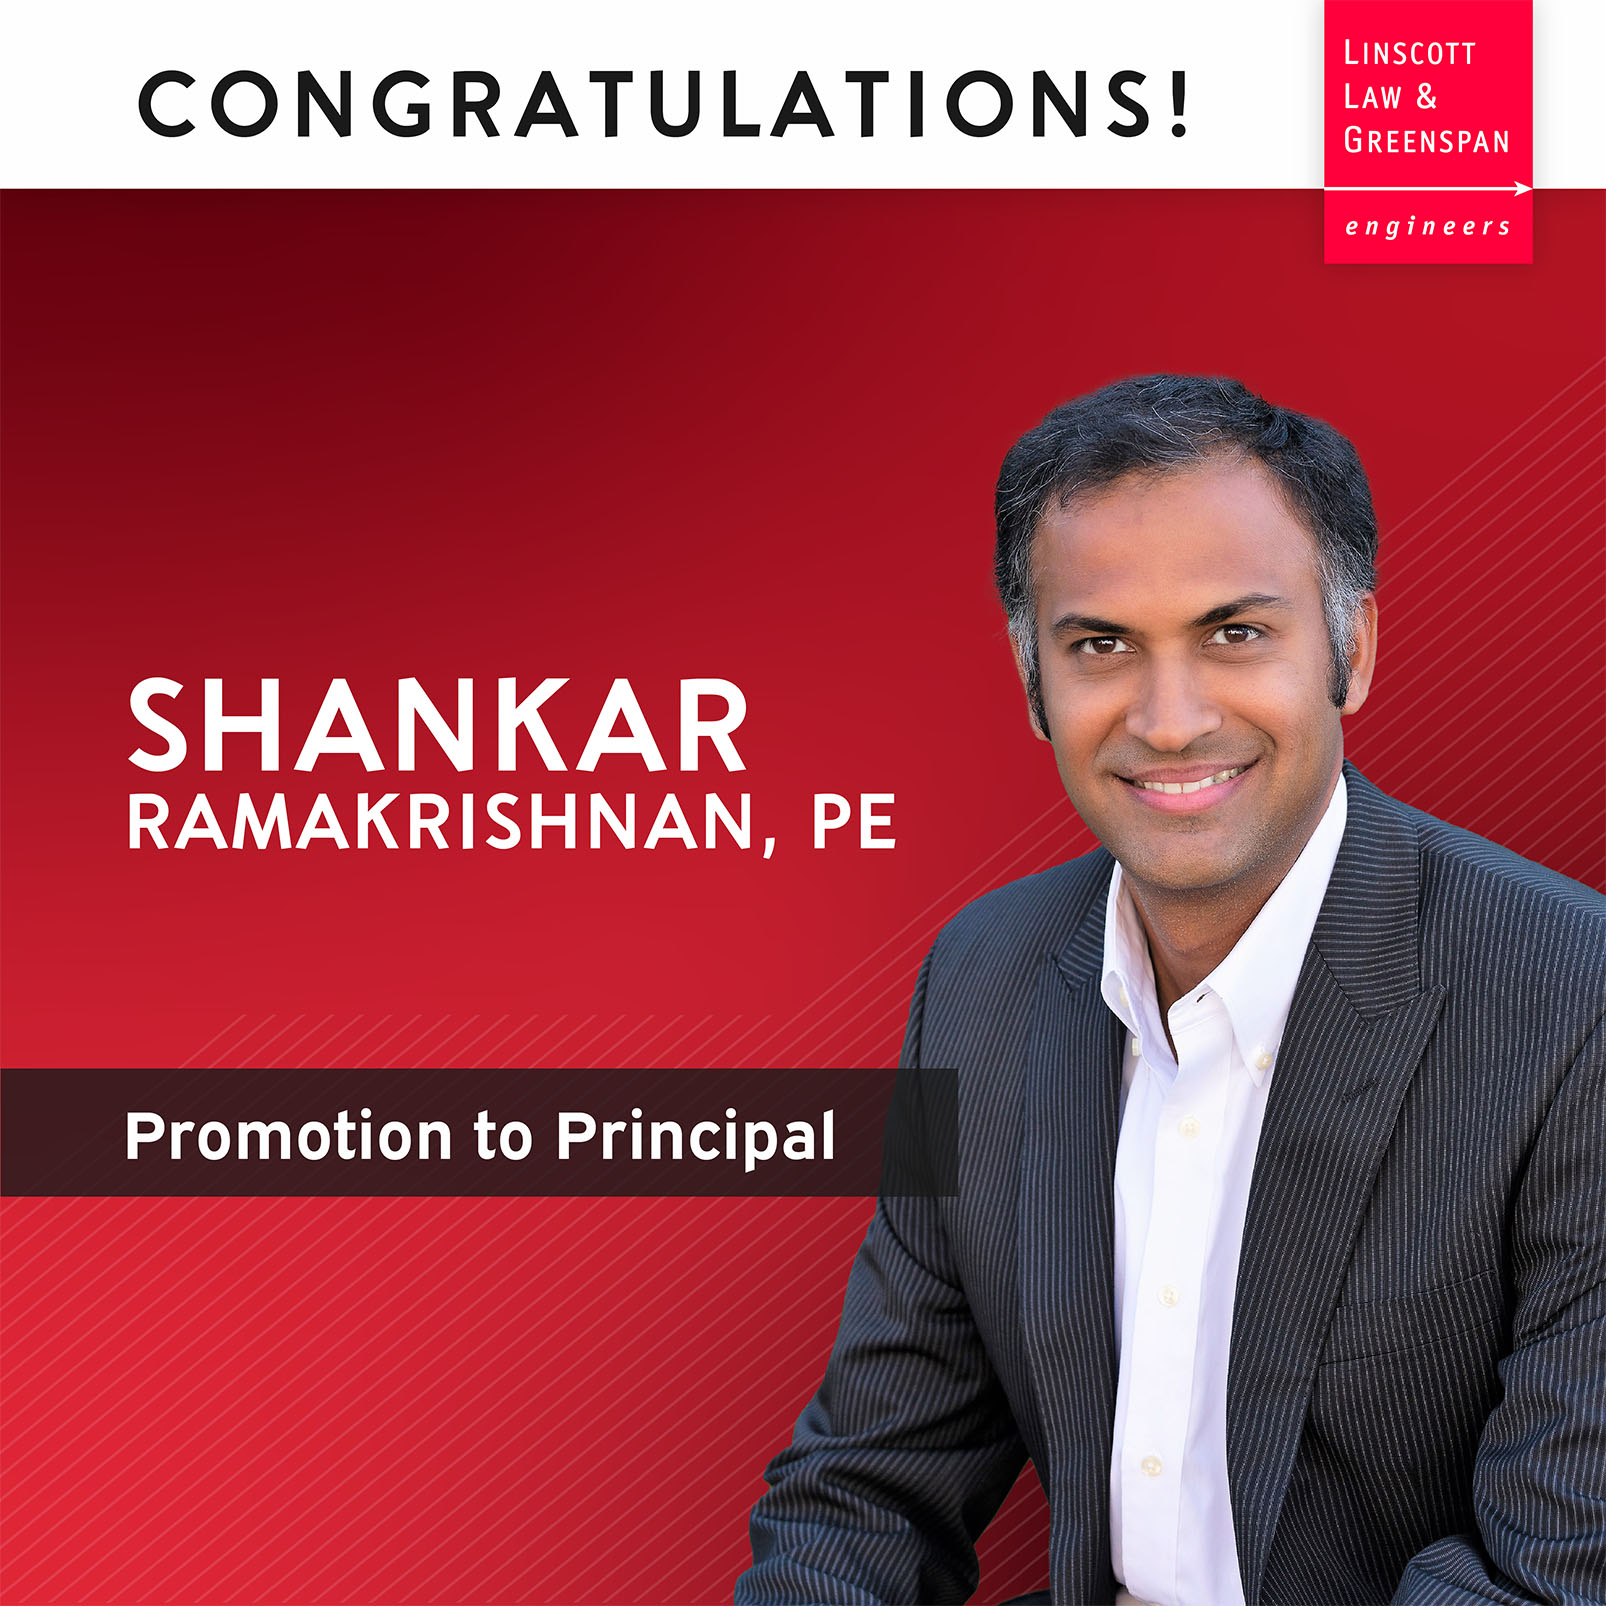 Shankar Ramakrishnan, PE - Promotion to Principal